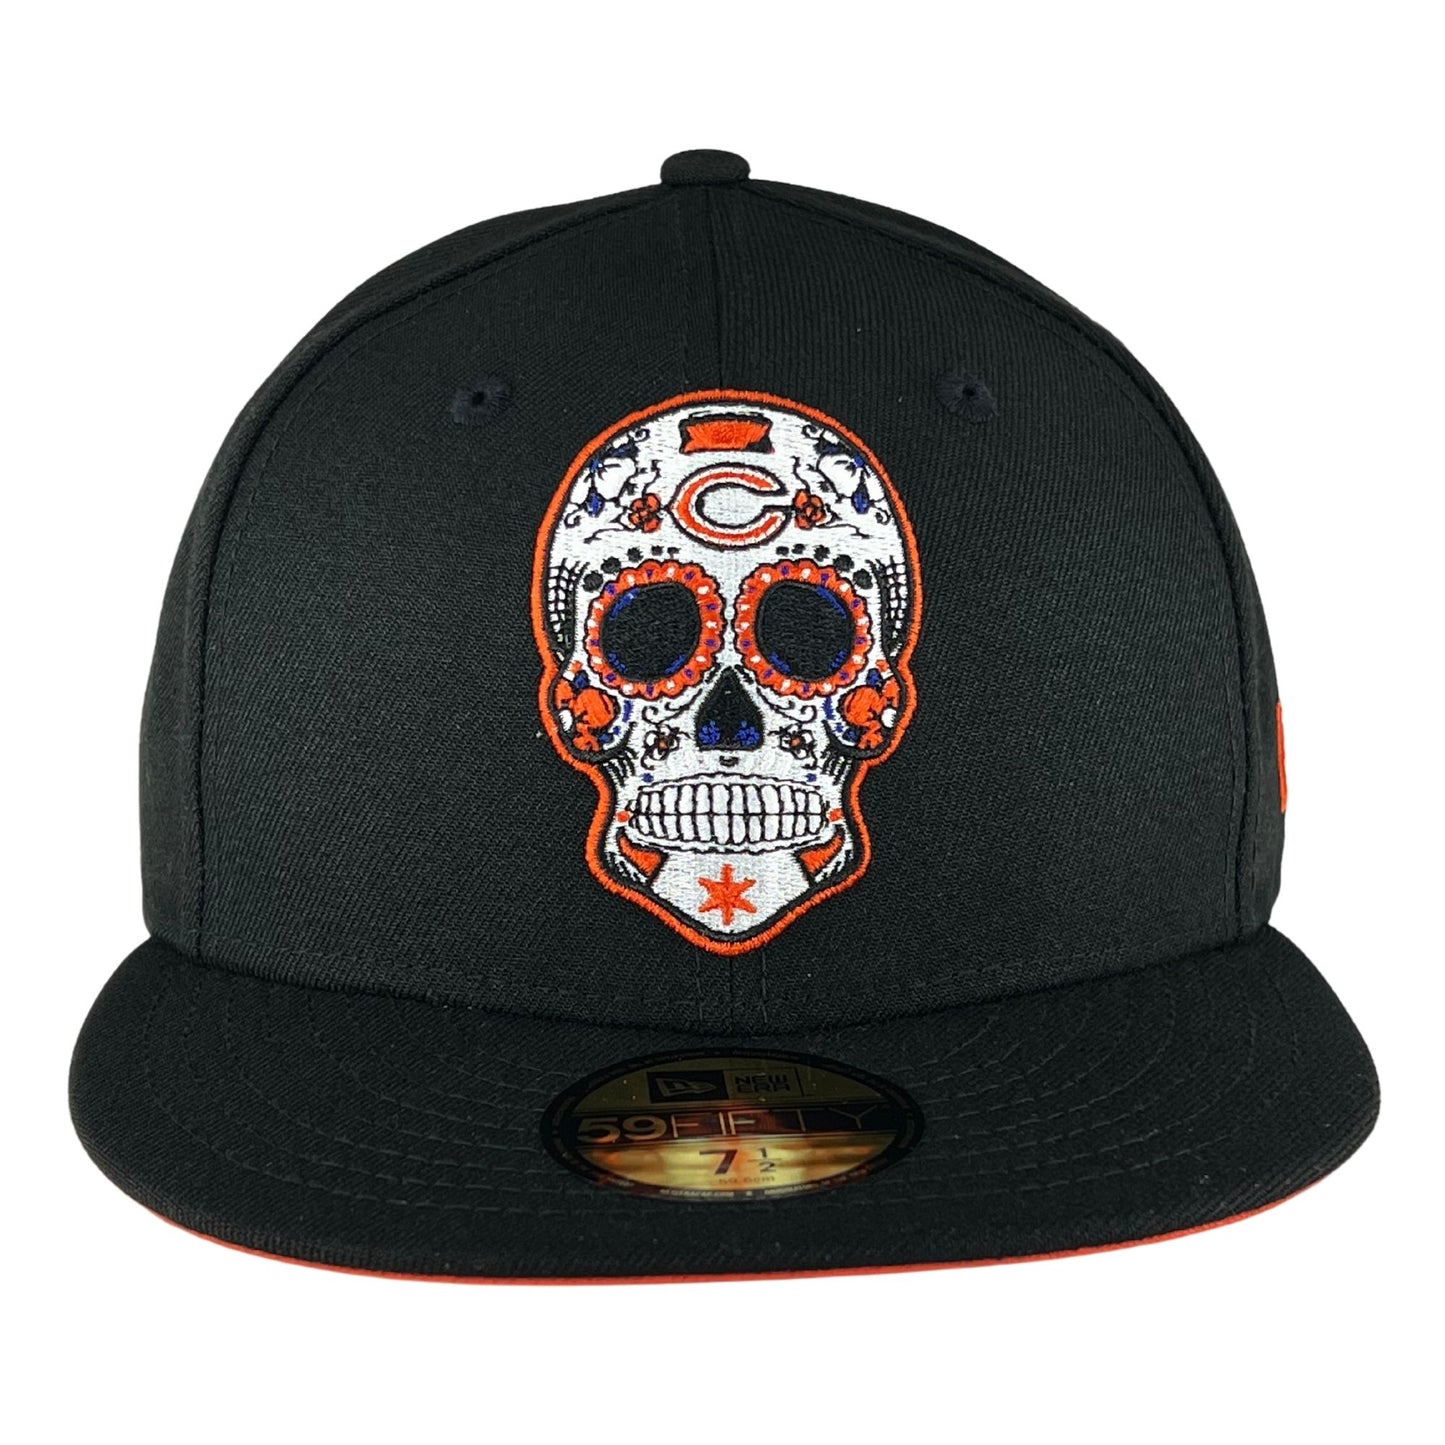 Chicago Bears Black/Orange Sugar Skull New Era 59FIFTY Fitted Hat